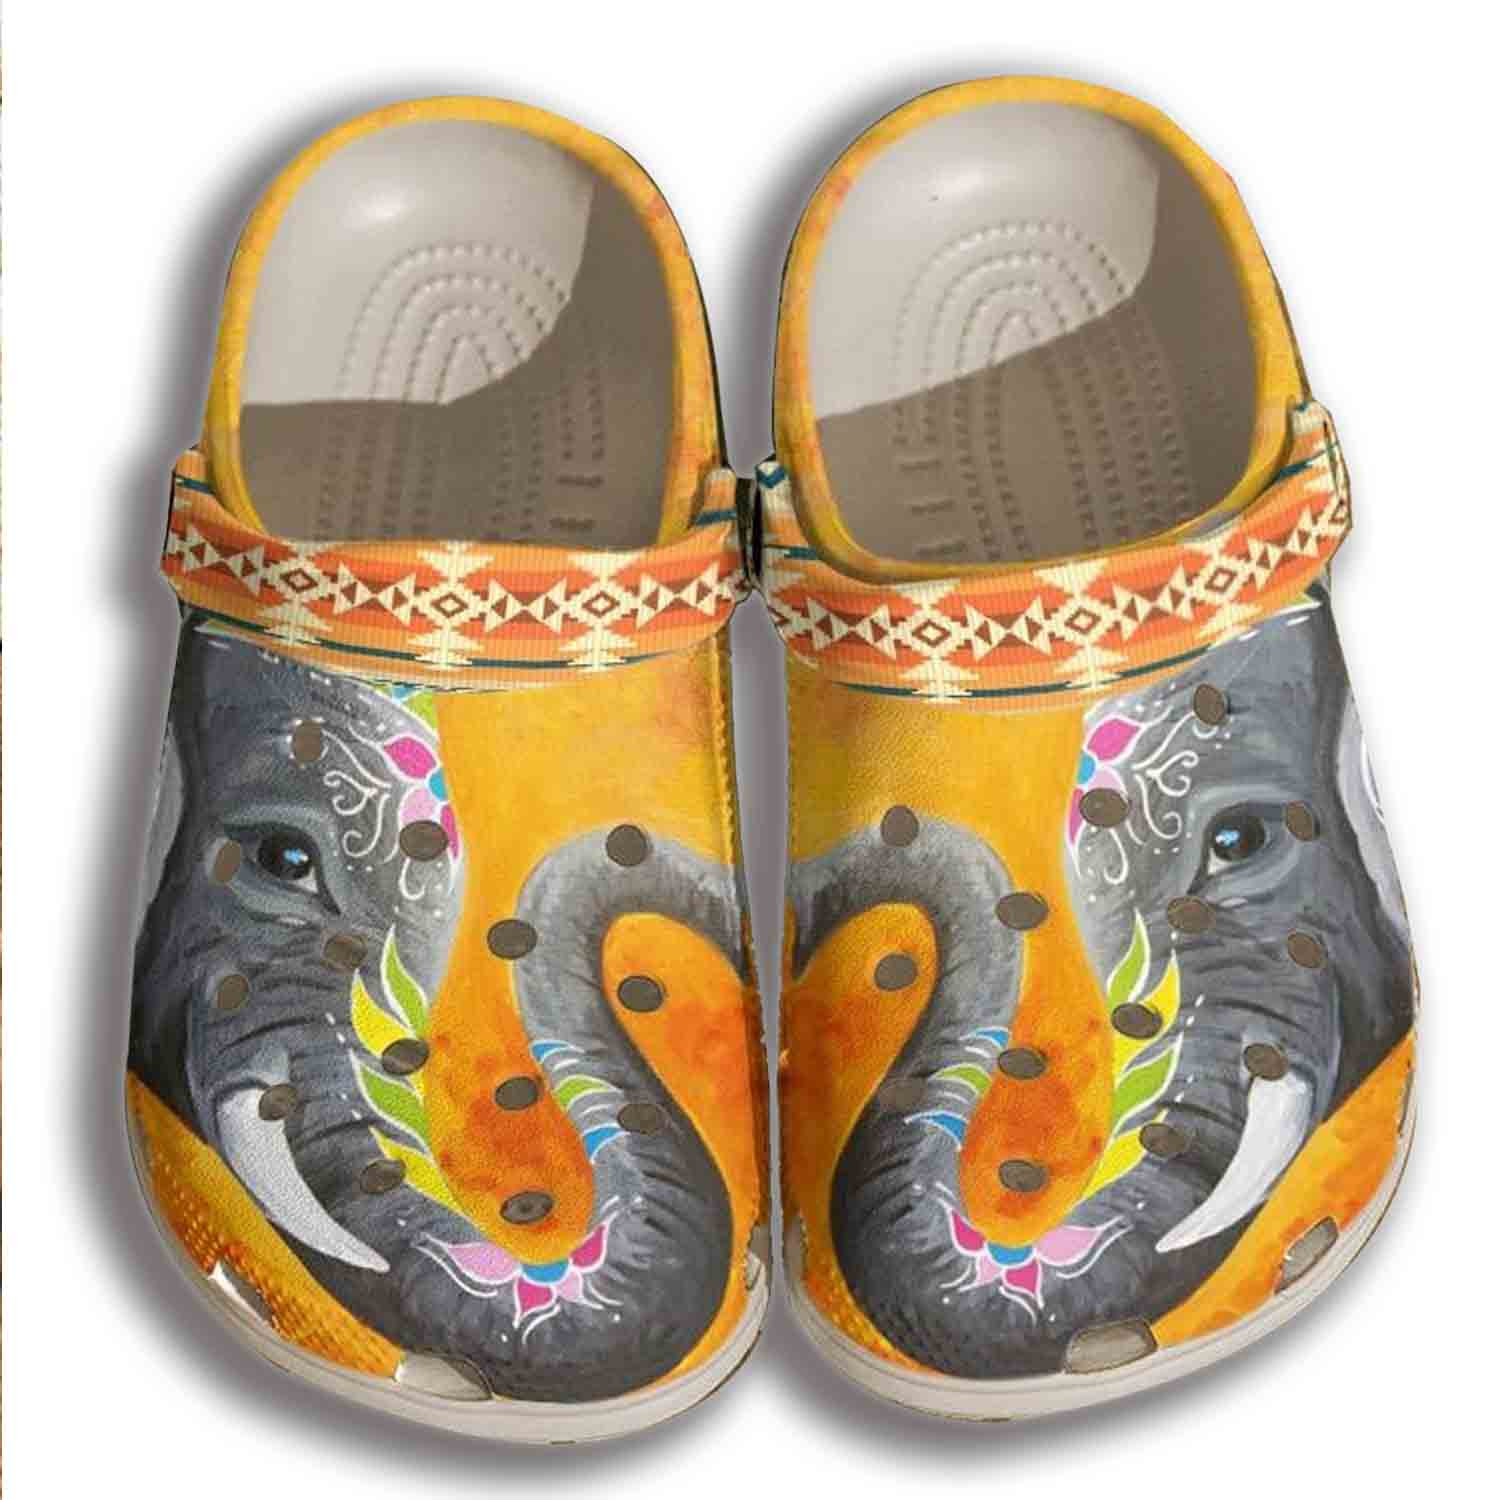 Elephant Artist Croc Crocs Shoes Women - Hippie Crocs Shoes Crocbland Clog Birthday Gifts For Niece Daughter